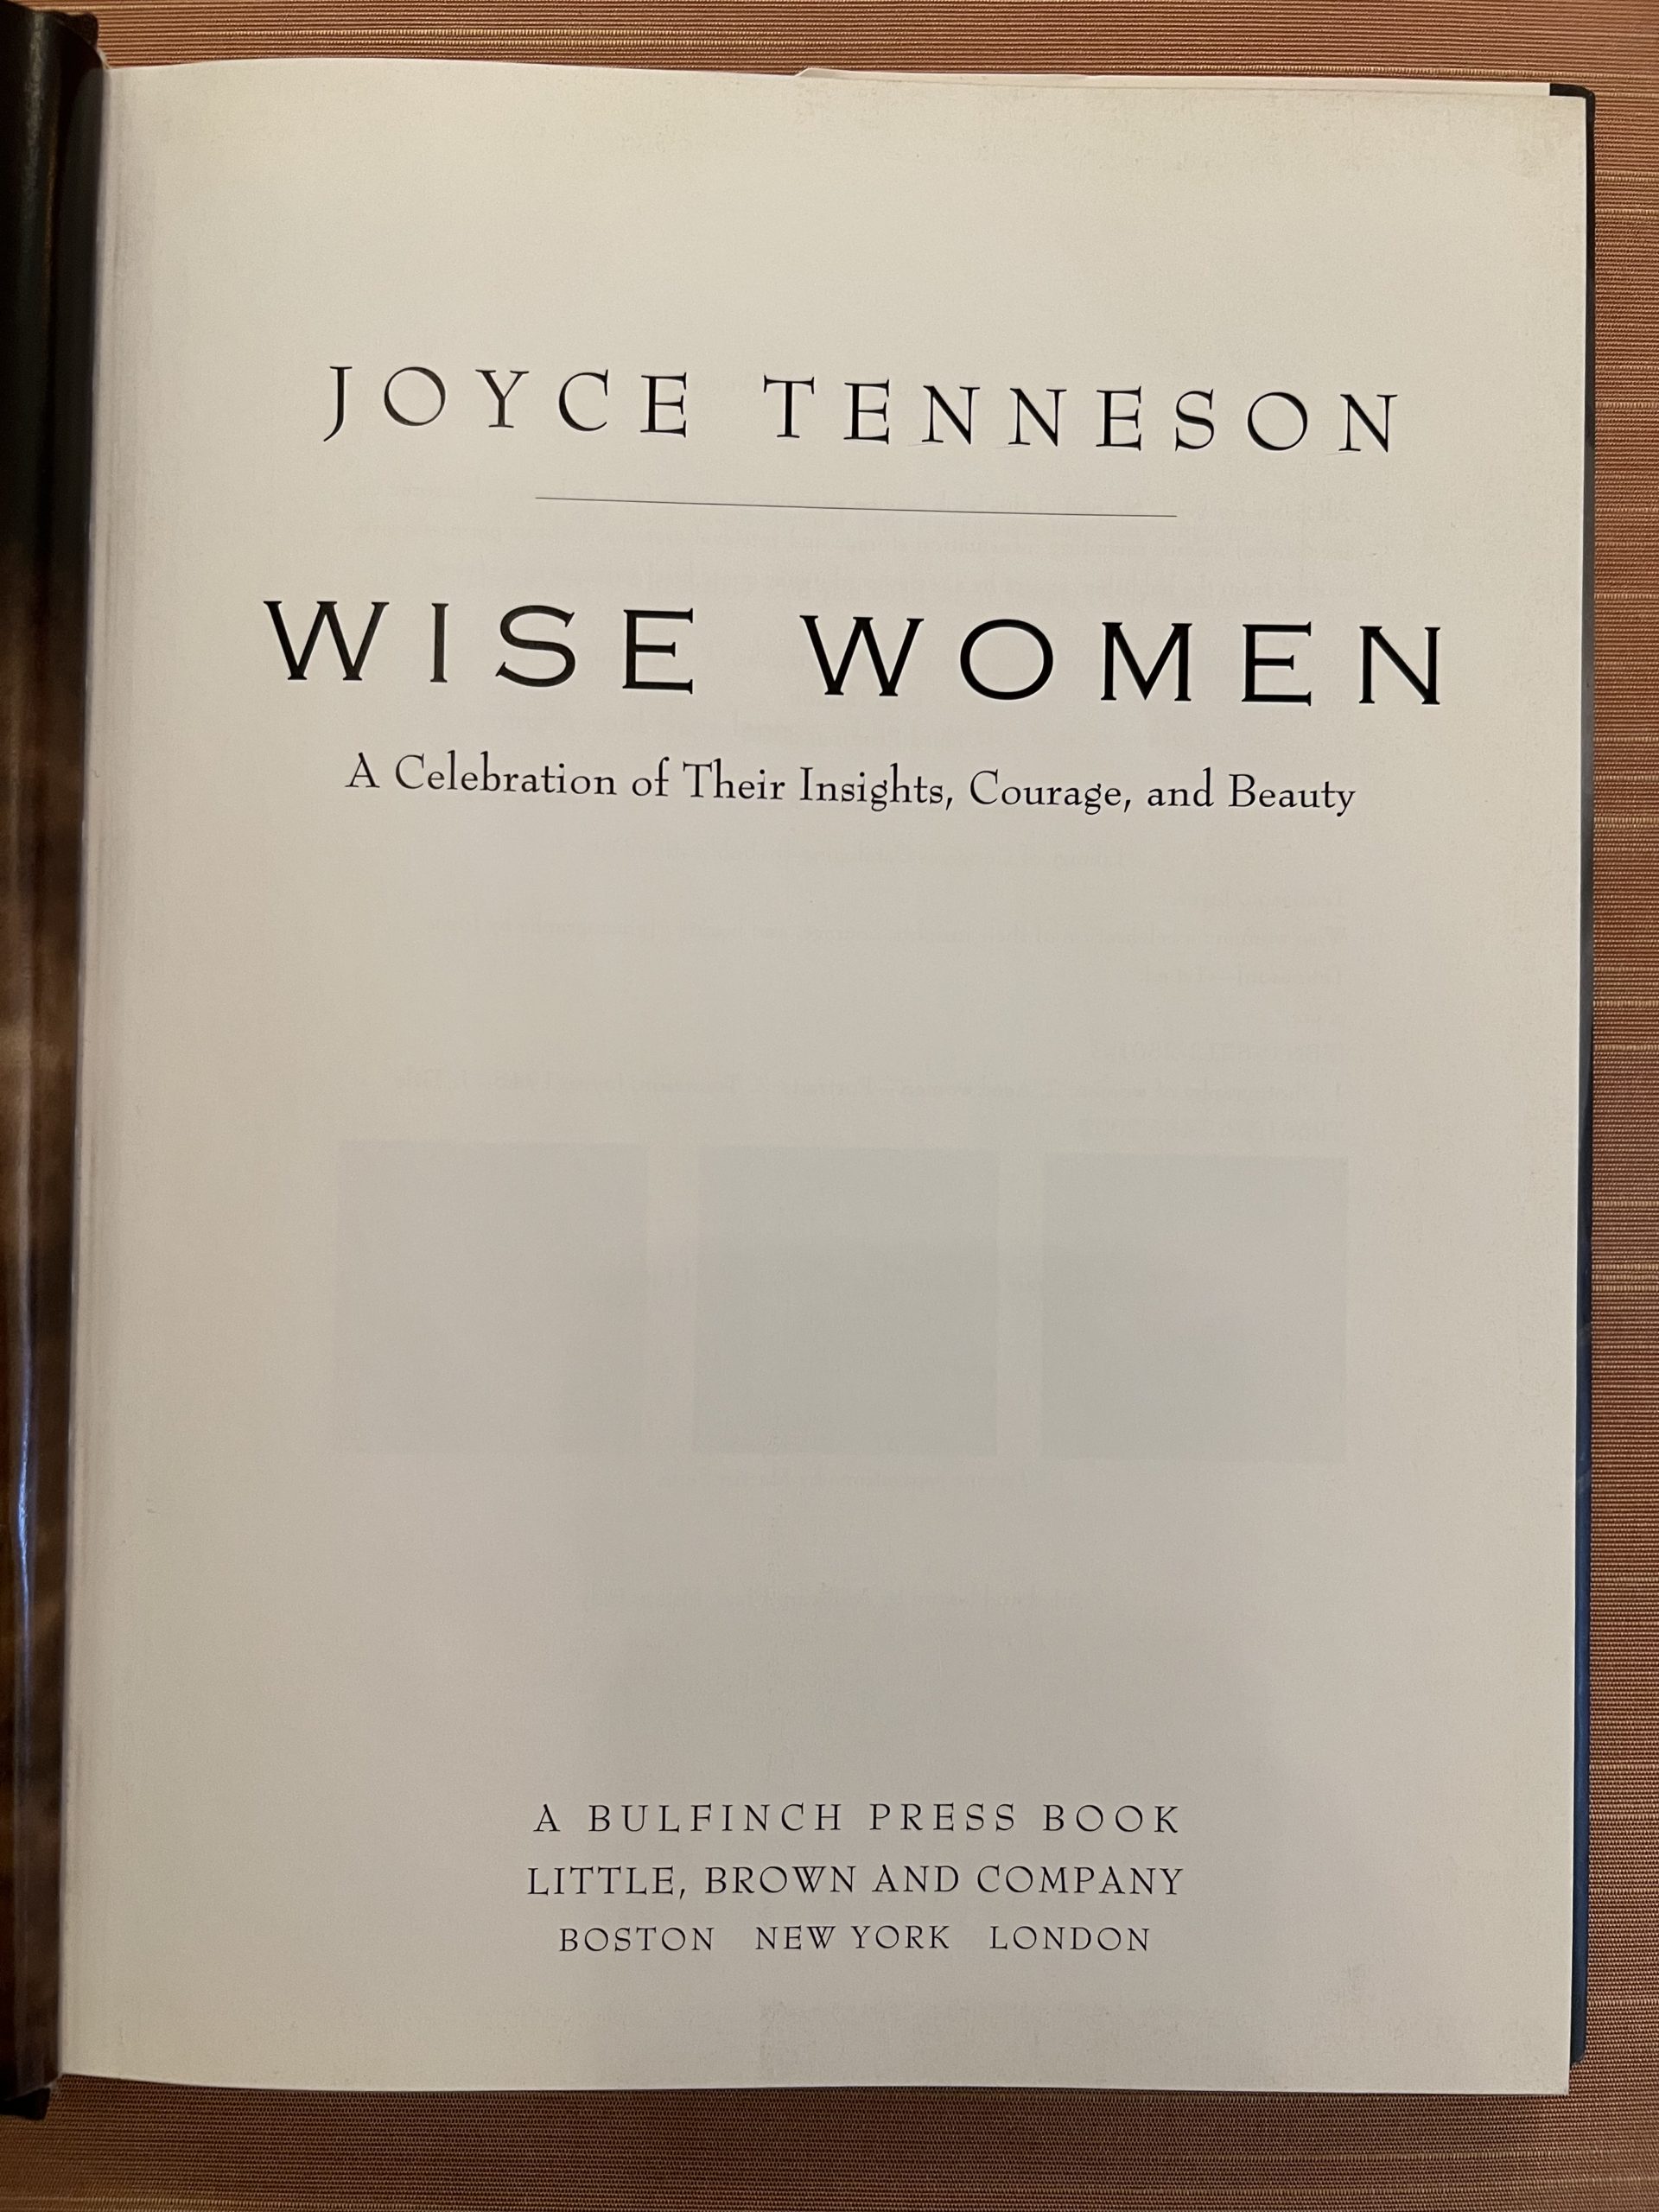 Joyce Tenneson Wise Women Giclee Series